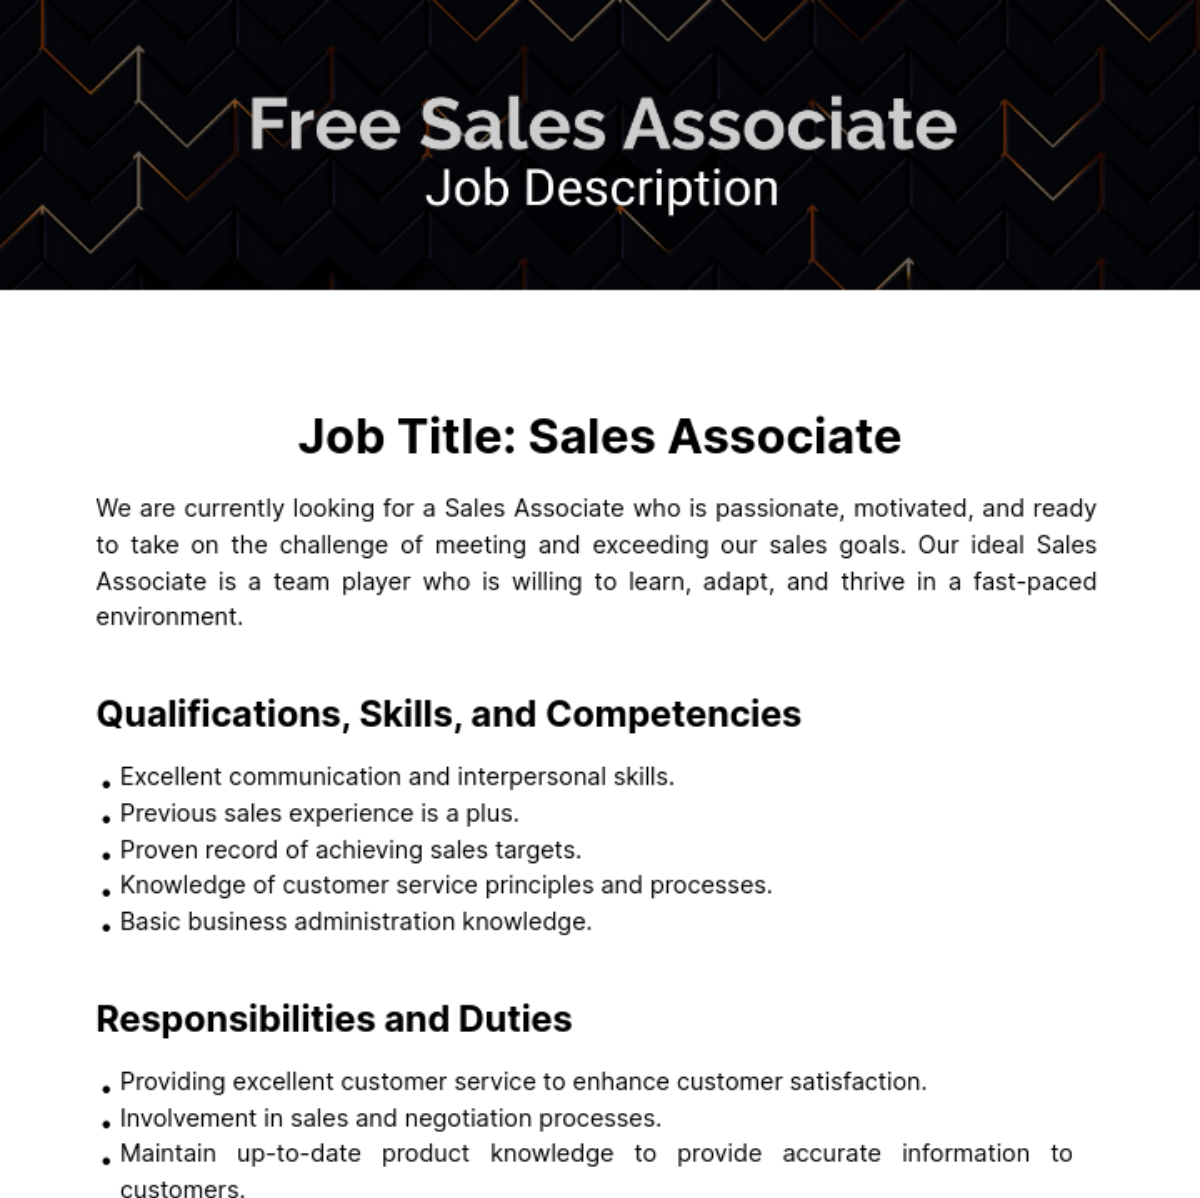 Free Sales Associate Job Description Template